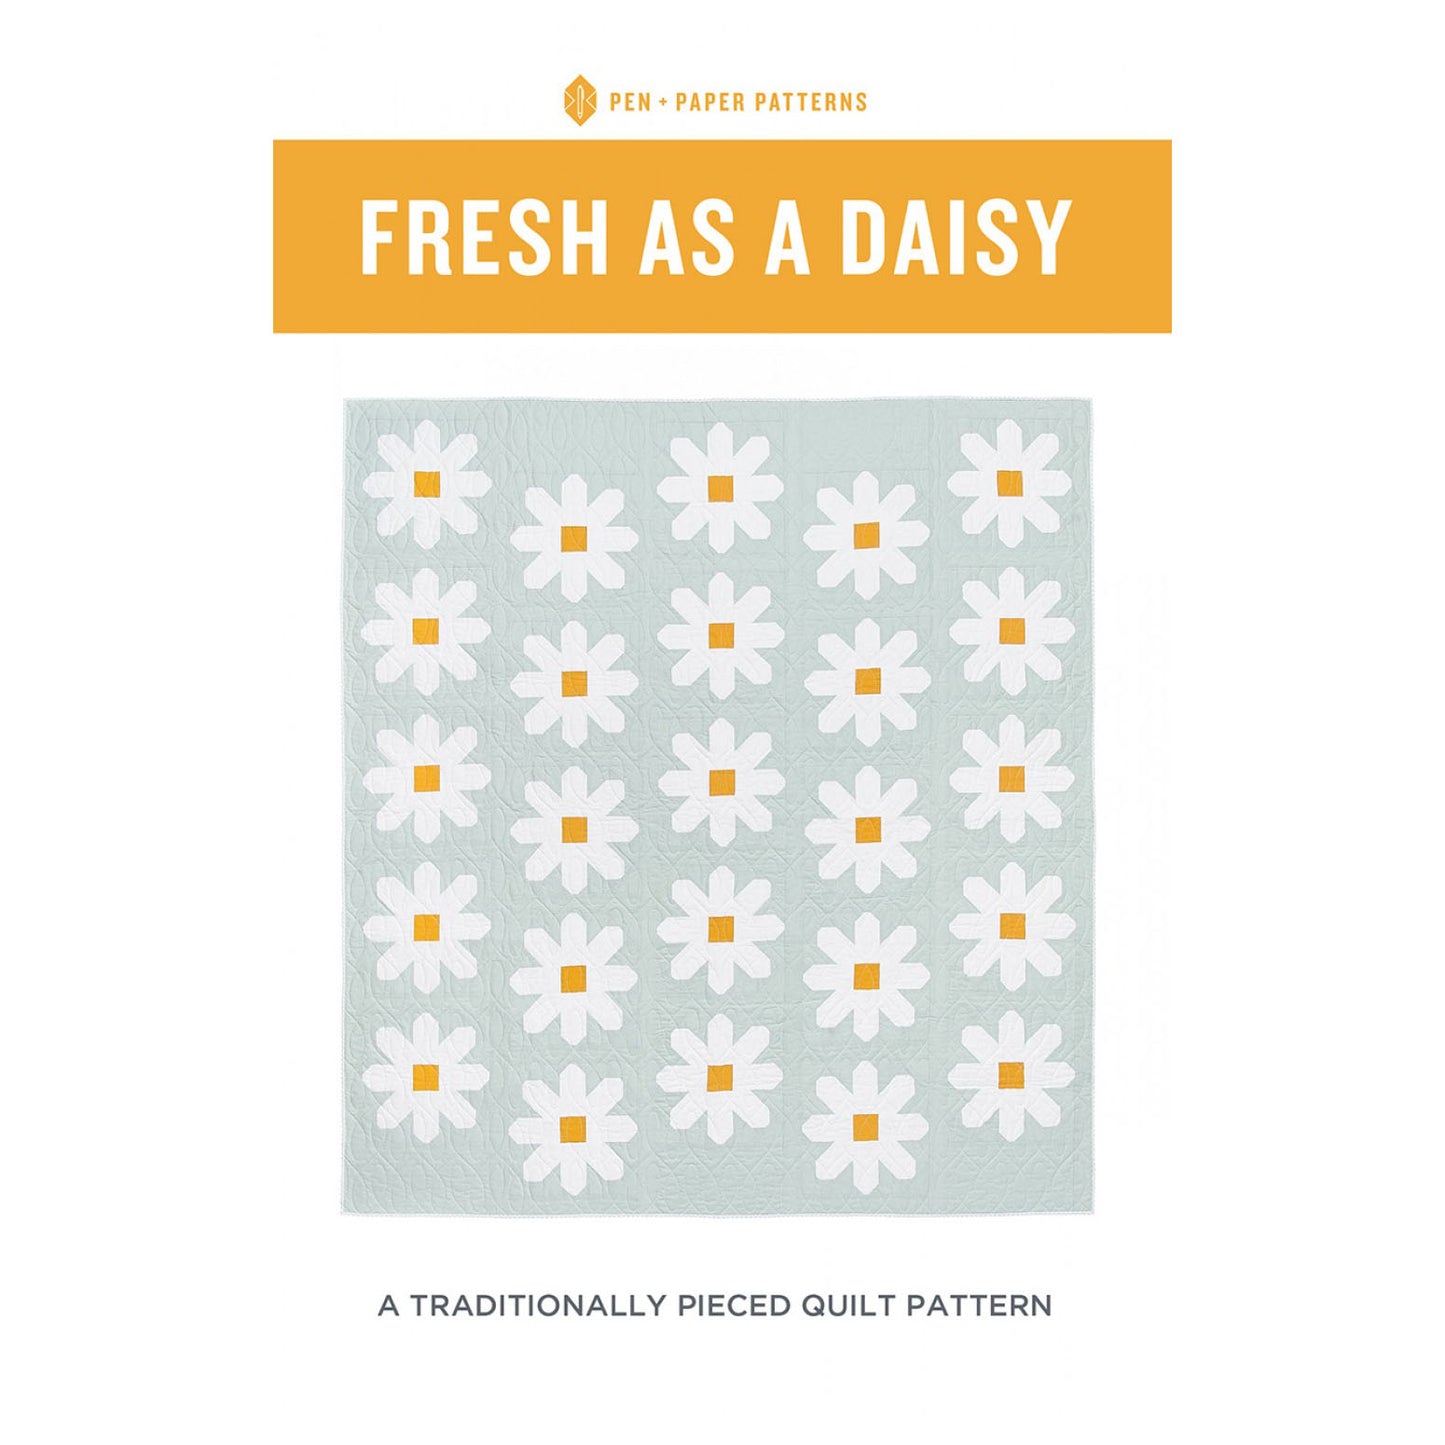 Pen & Paper Patterns - Fresh As A Daisy